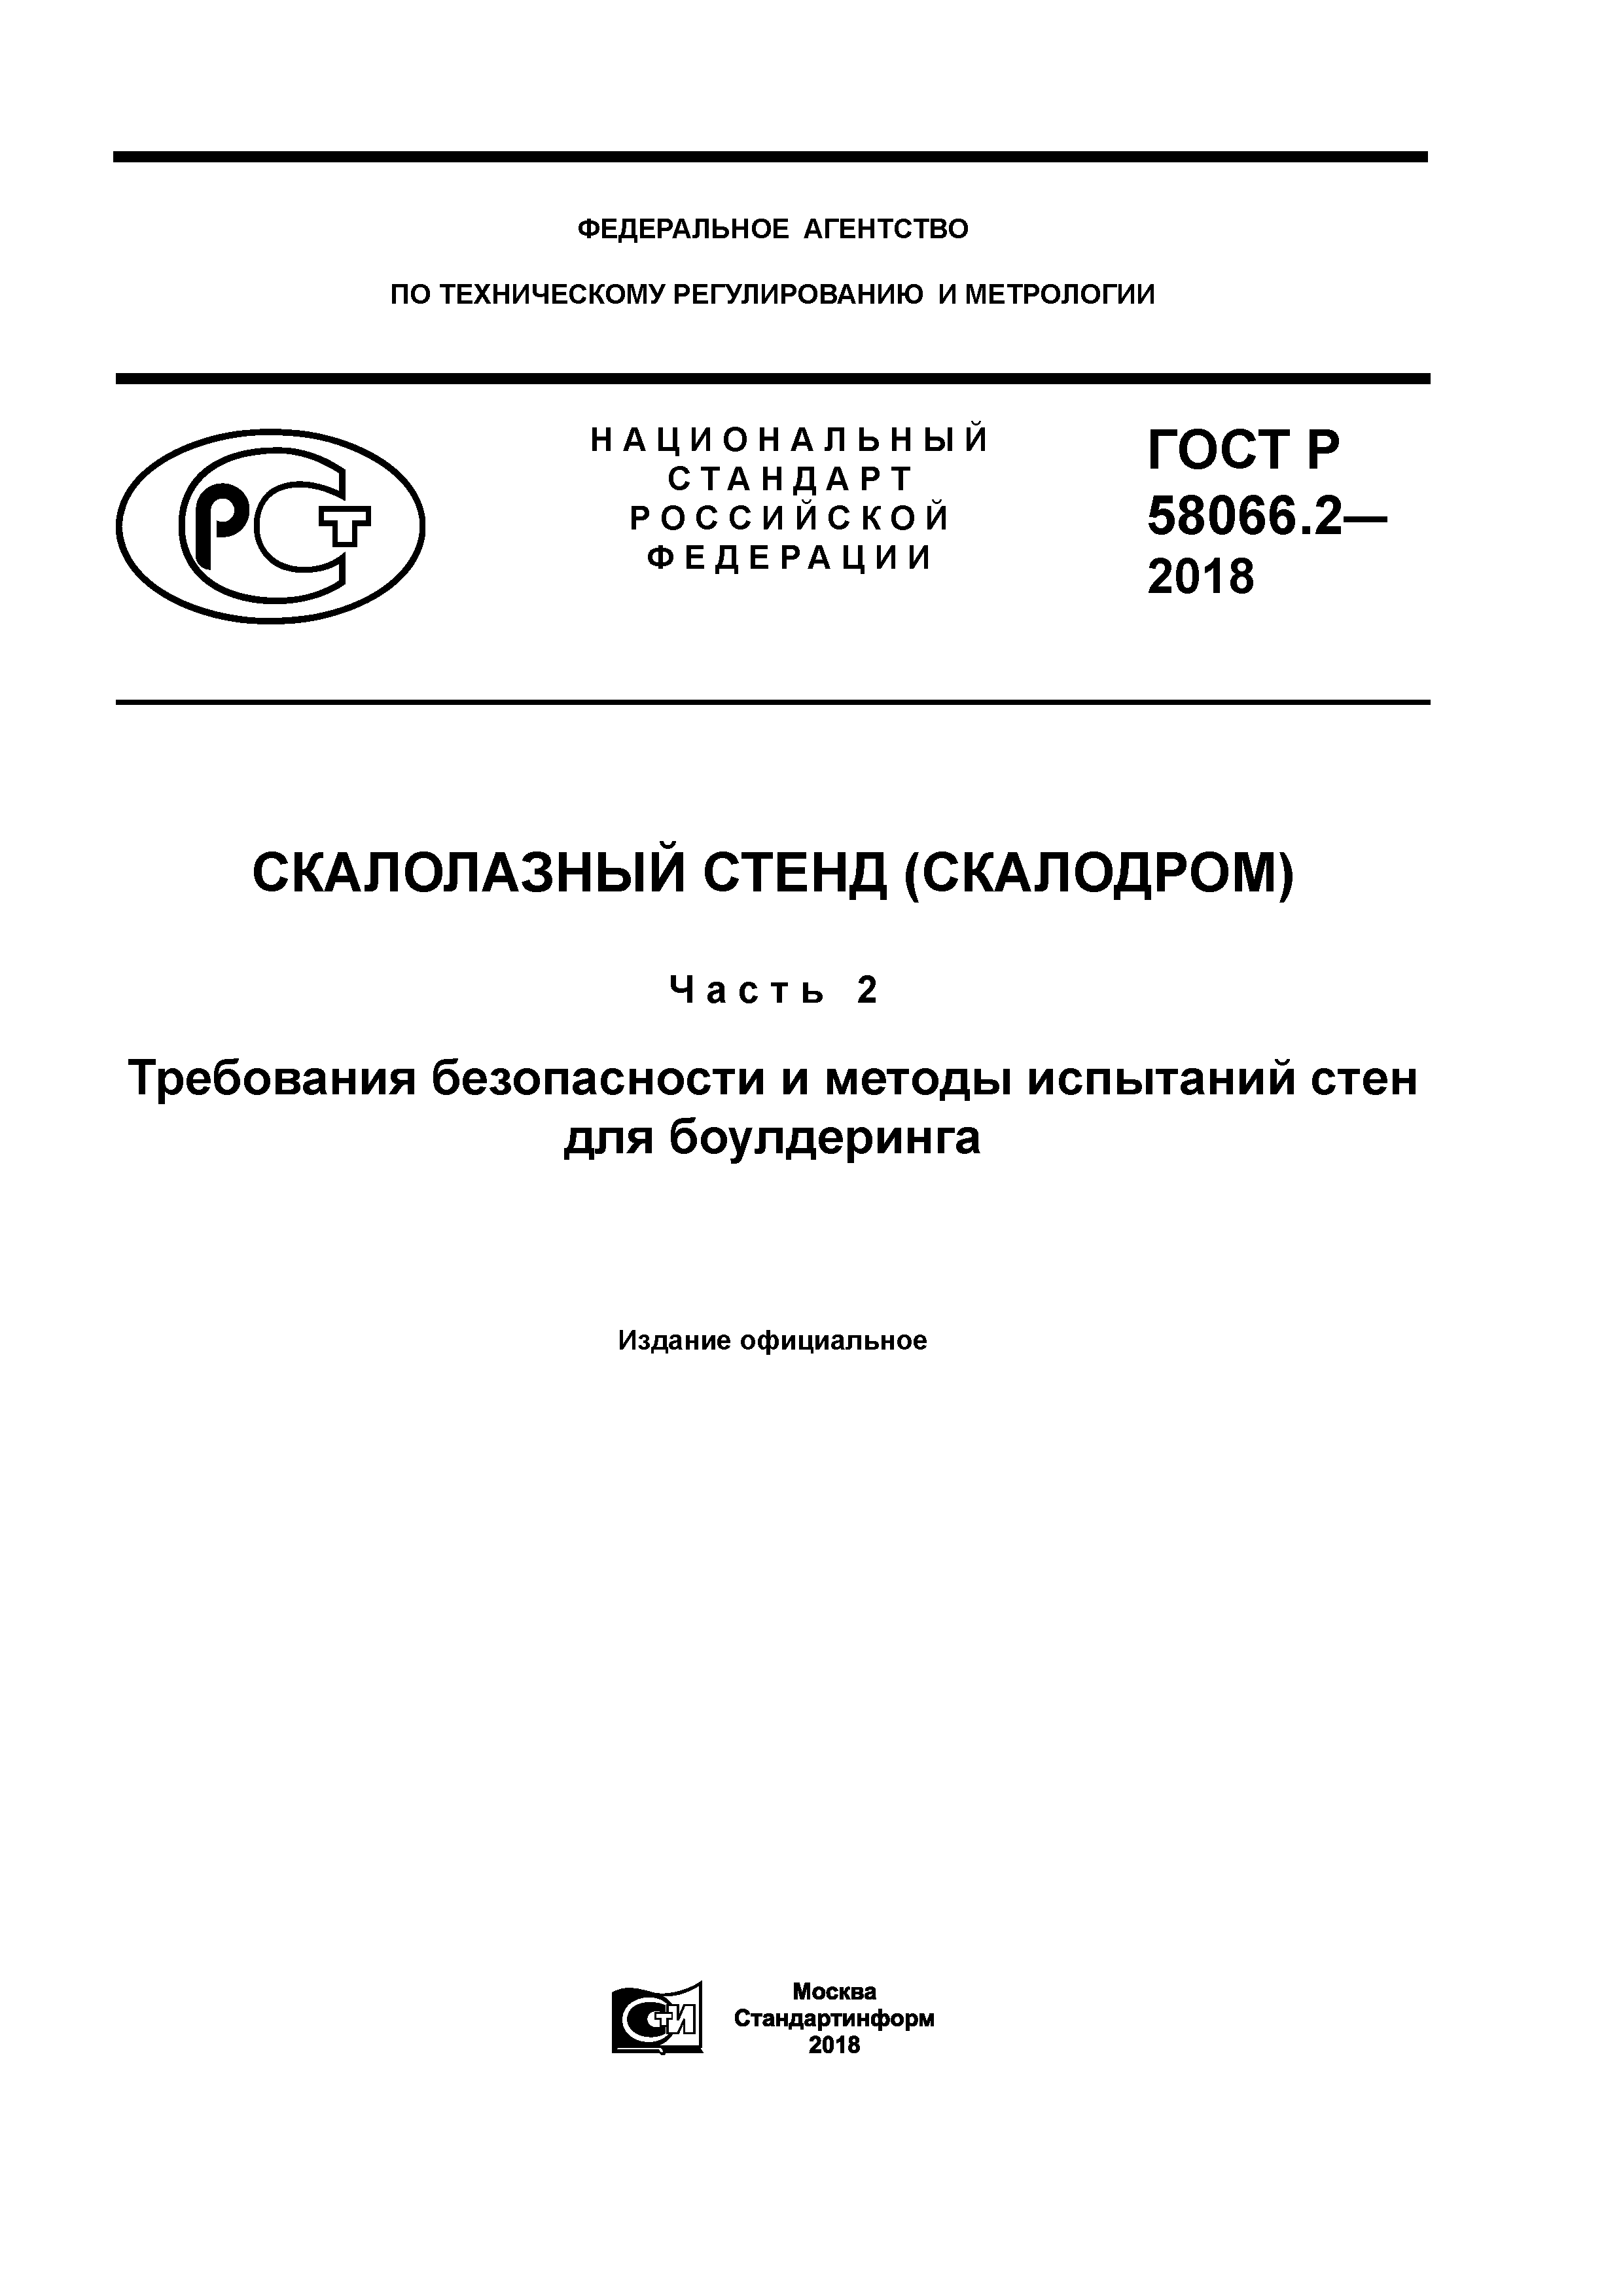 ГОСТ Р 58066.2-2018